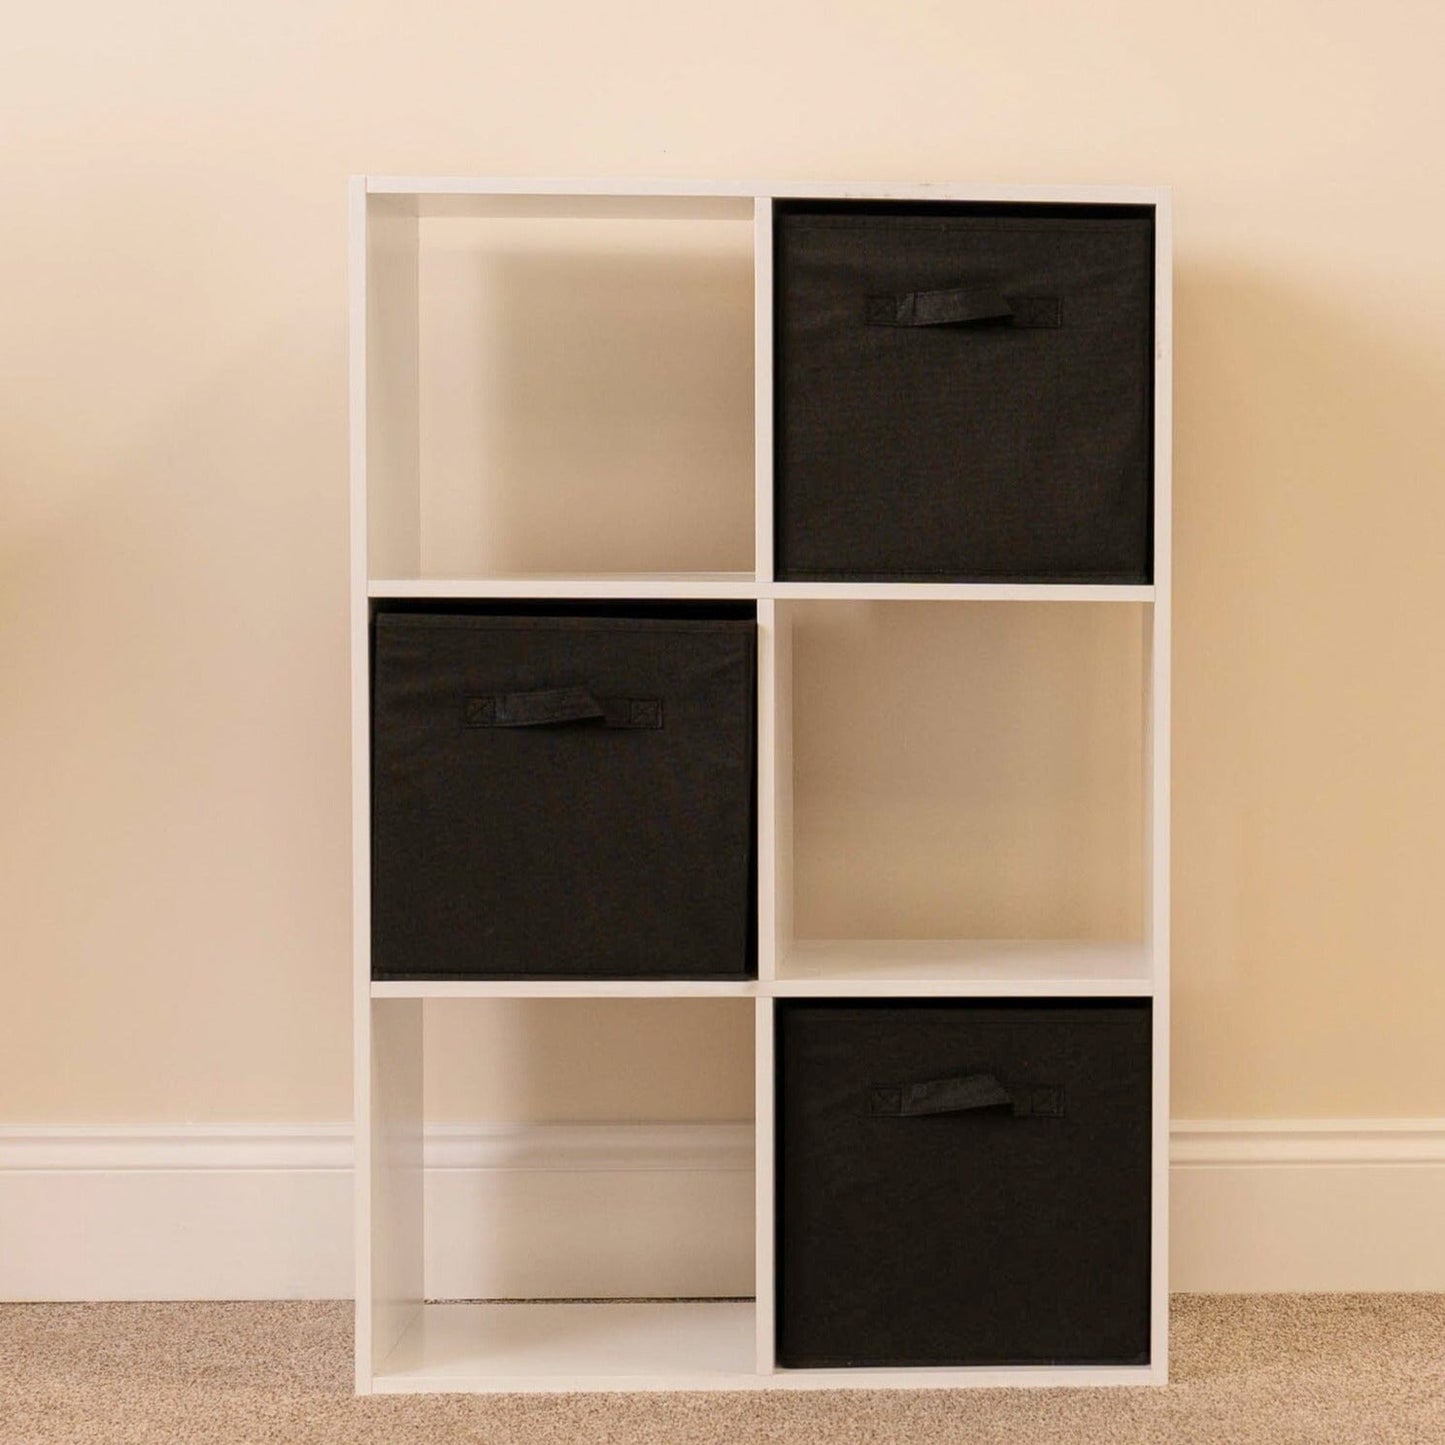 6 Cube White Bookcase Wooden Display Unit Shelving Storage Bookshelf Shelves (Black Basket)